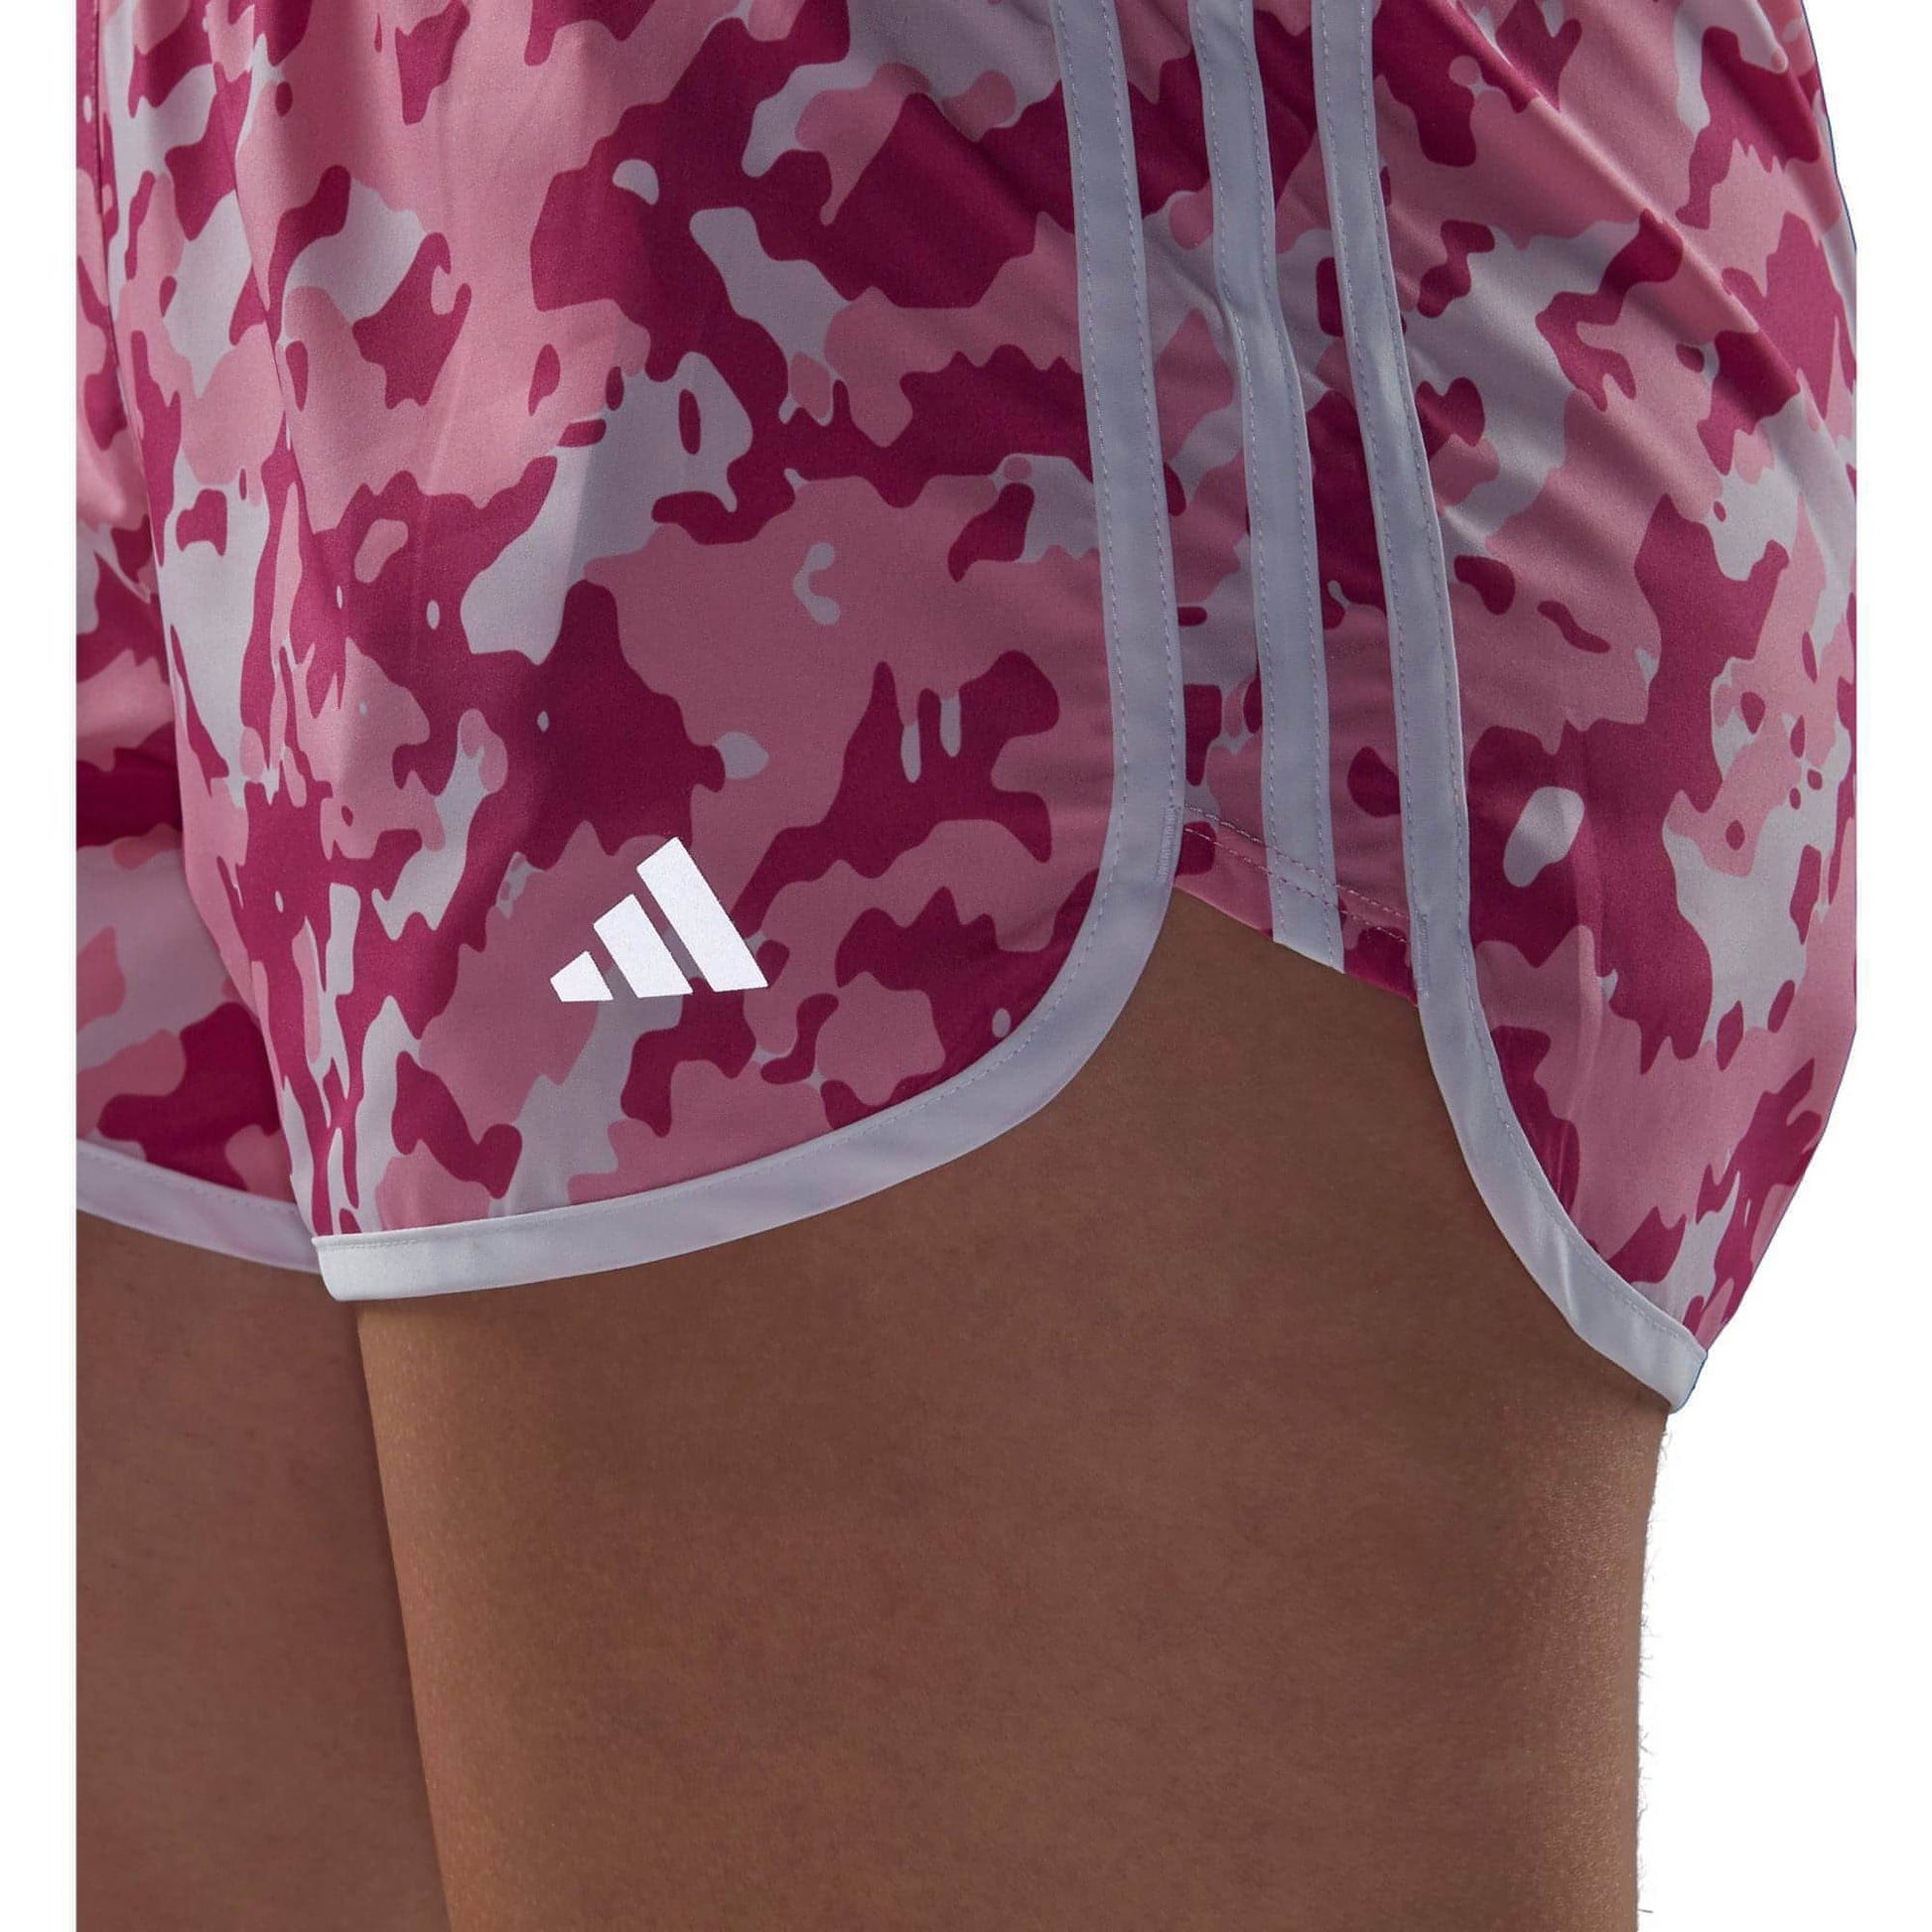 Adidas Marathon Print Shorts Hr9970 Details